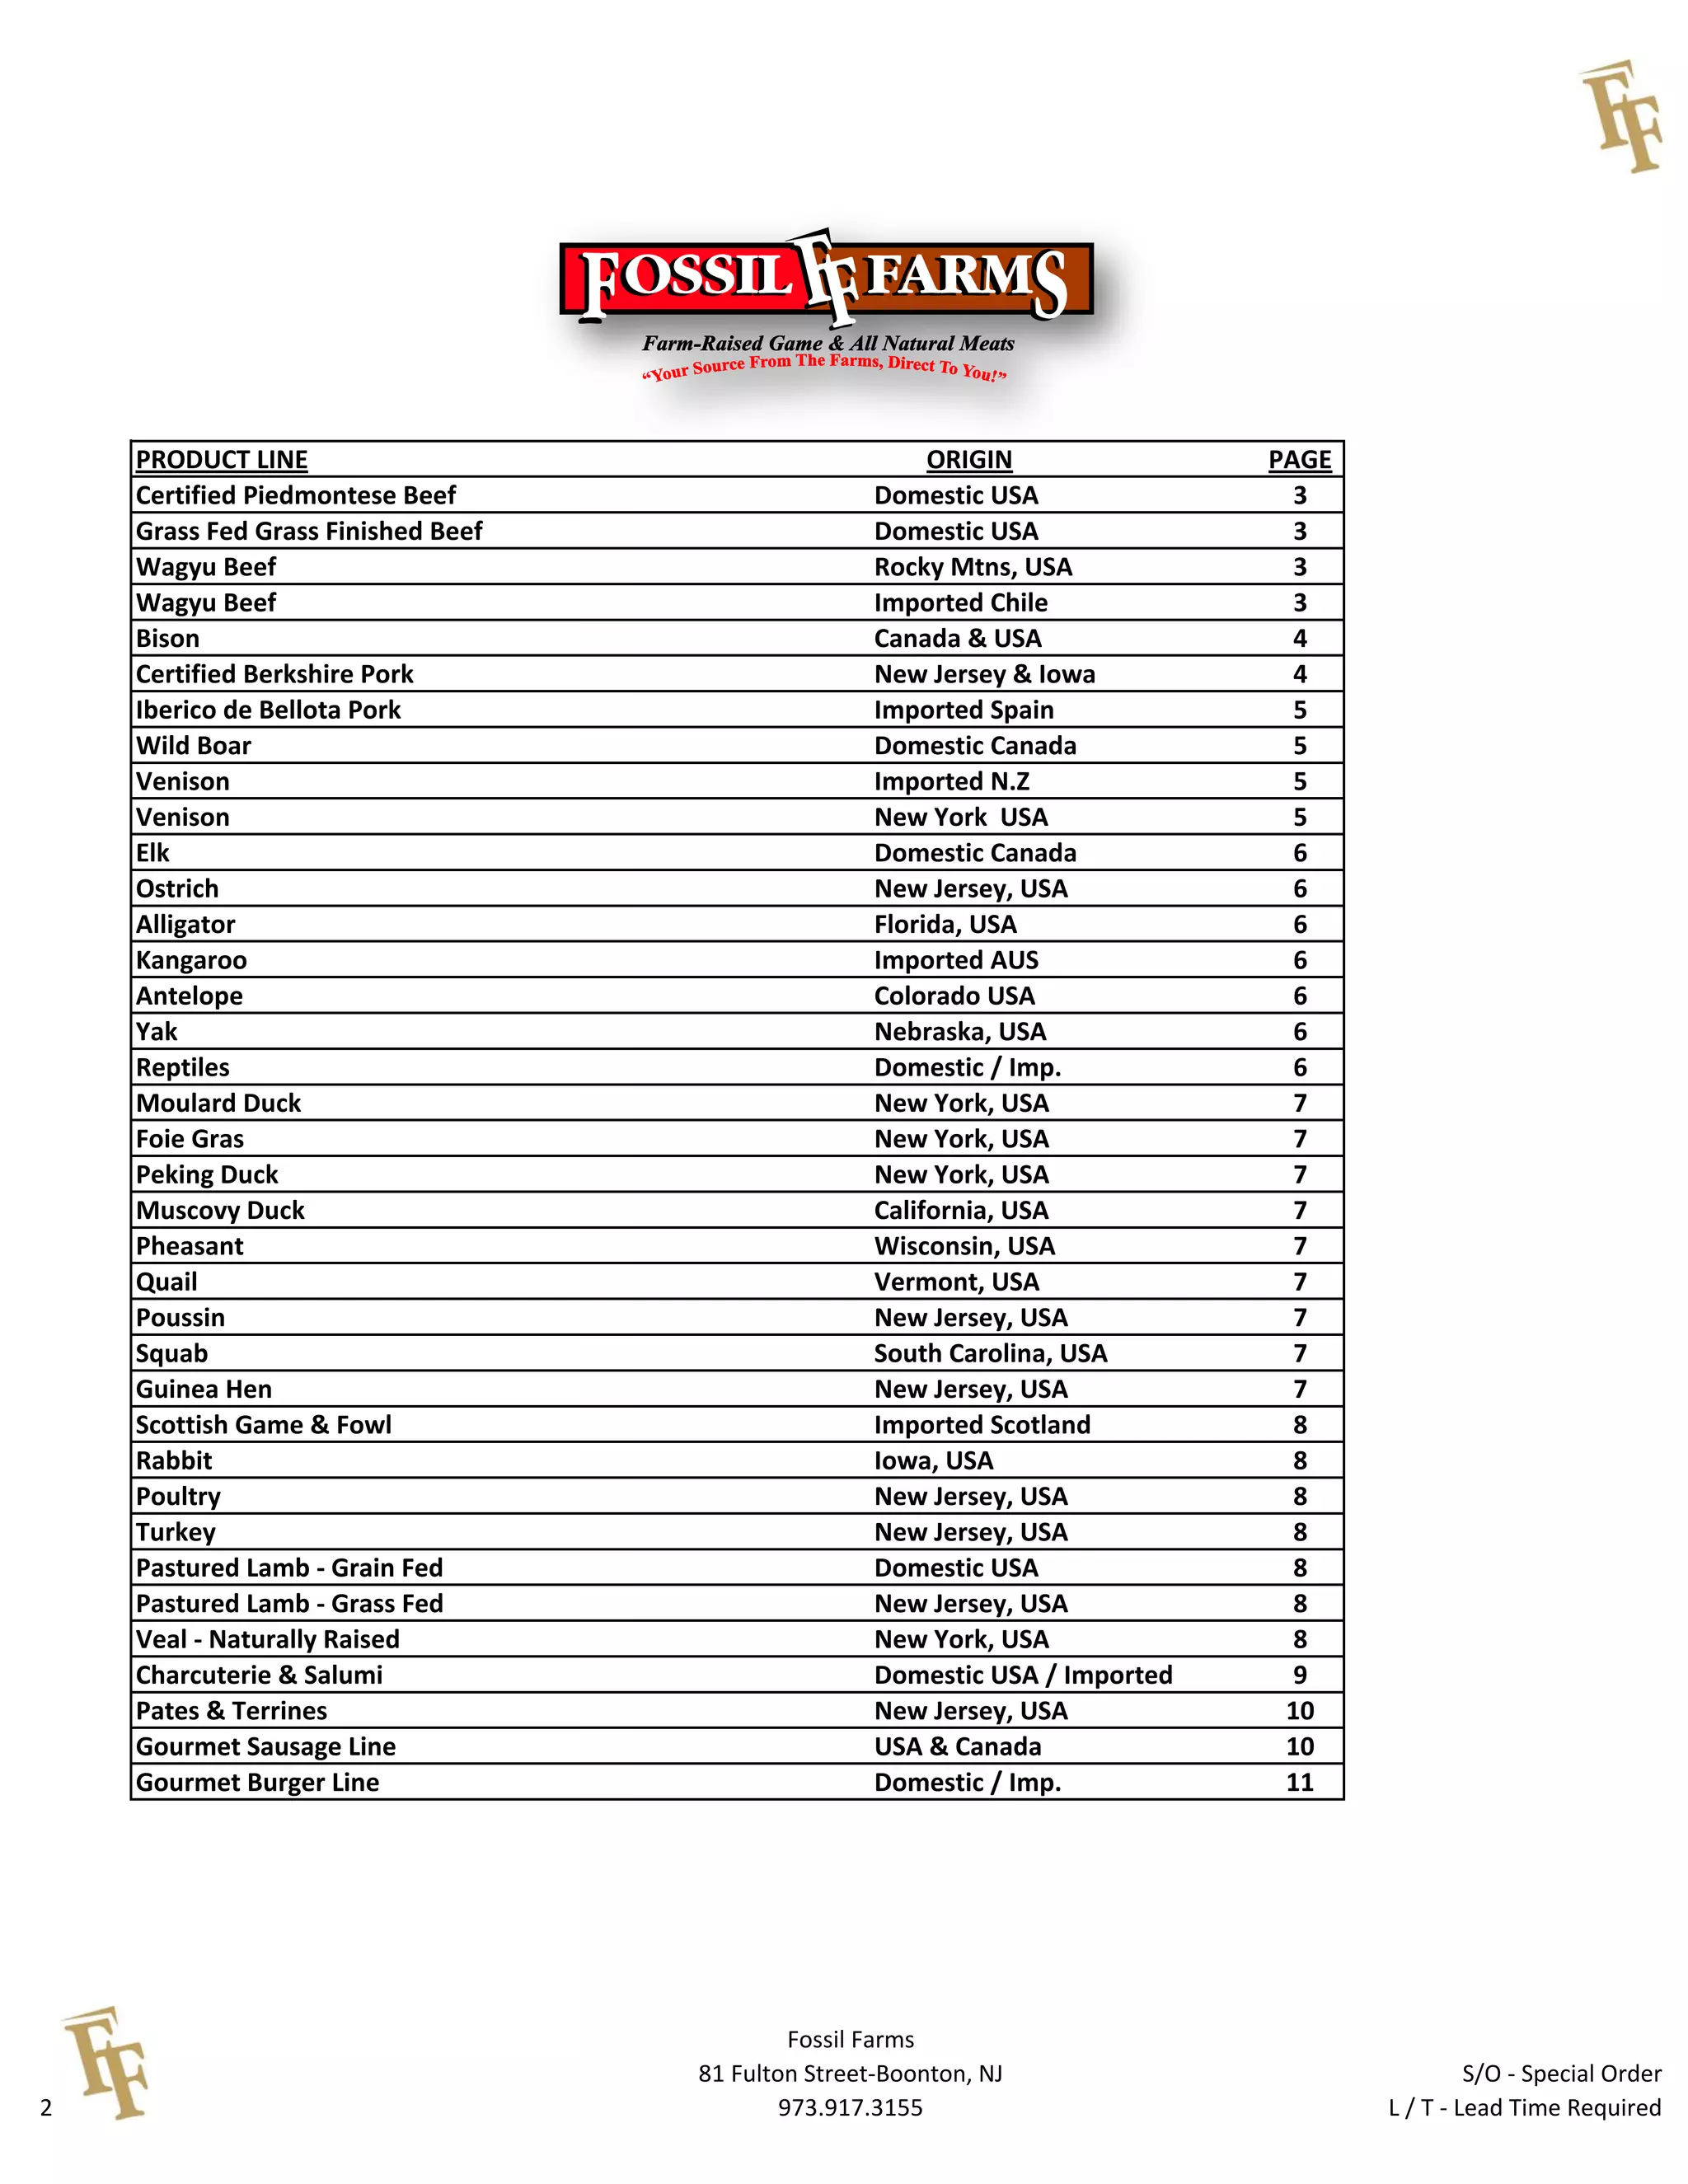 Fossil Farms Product List  2012